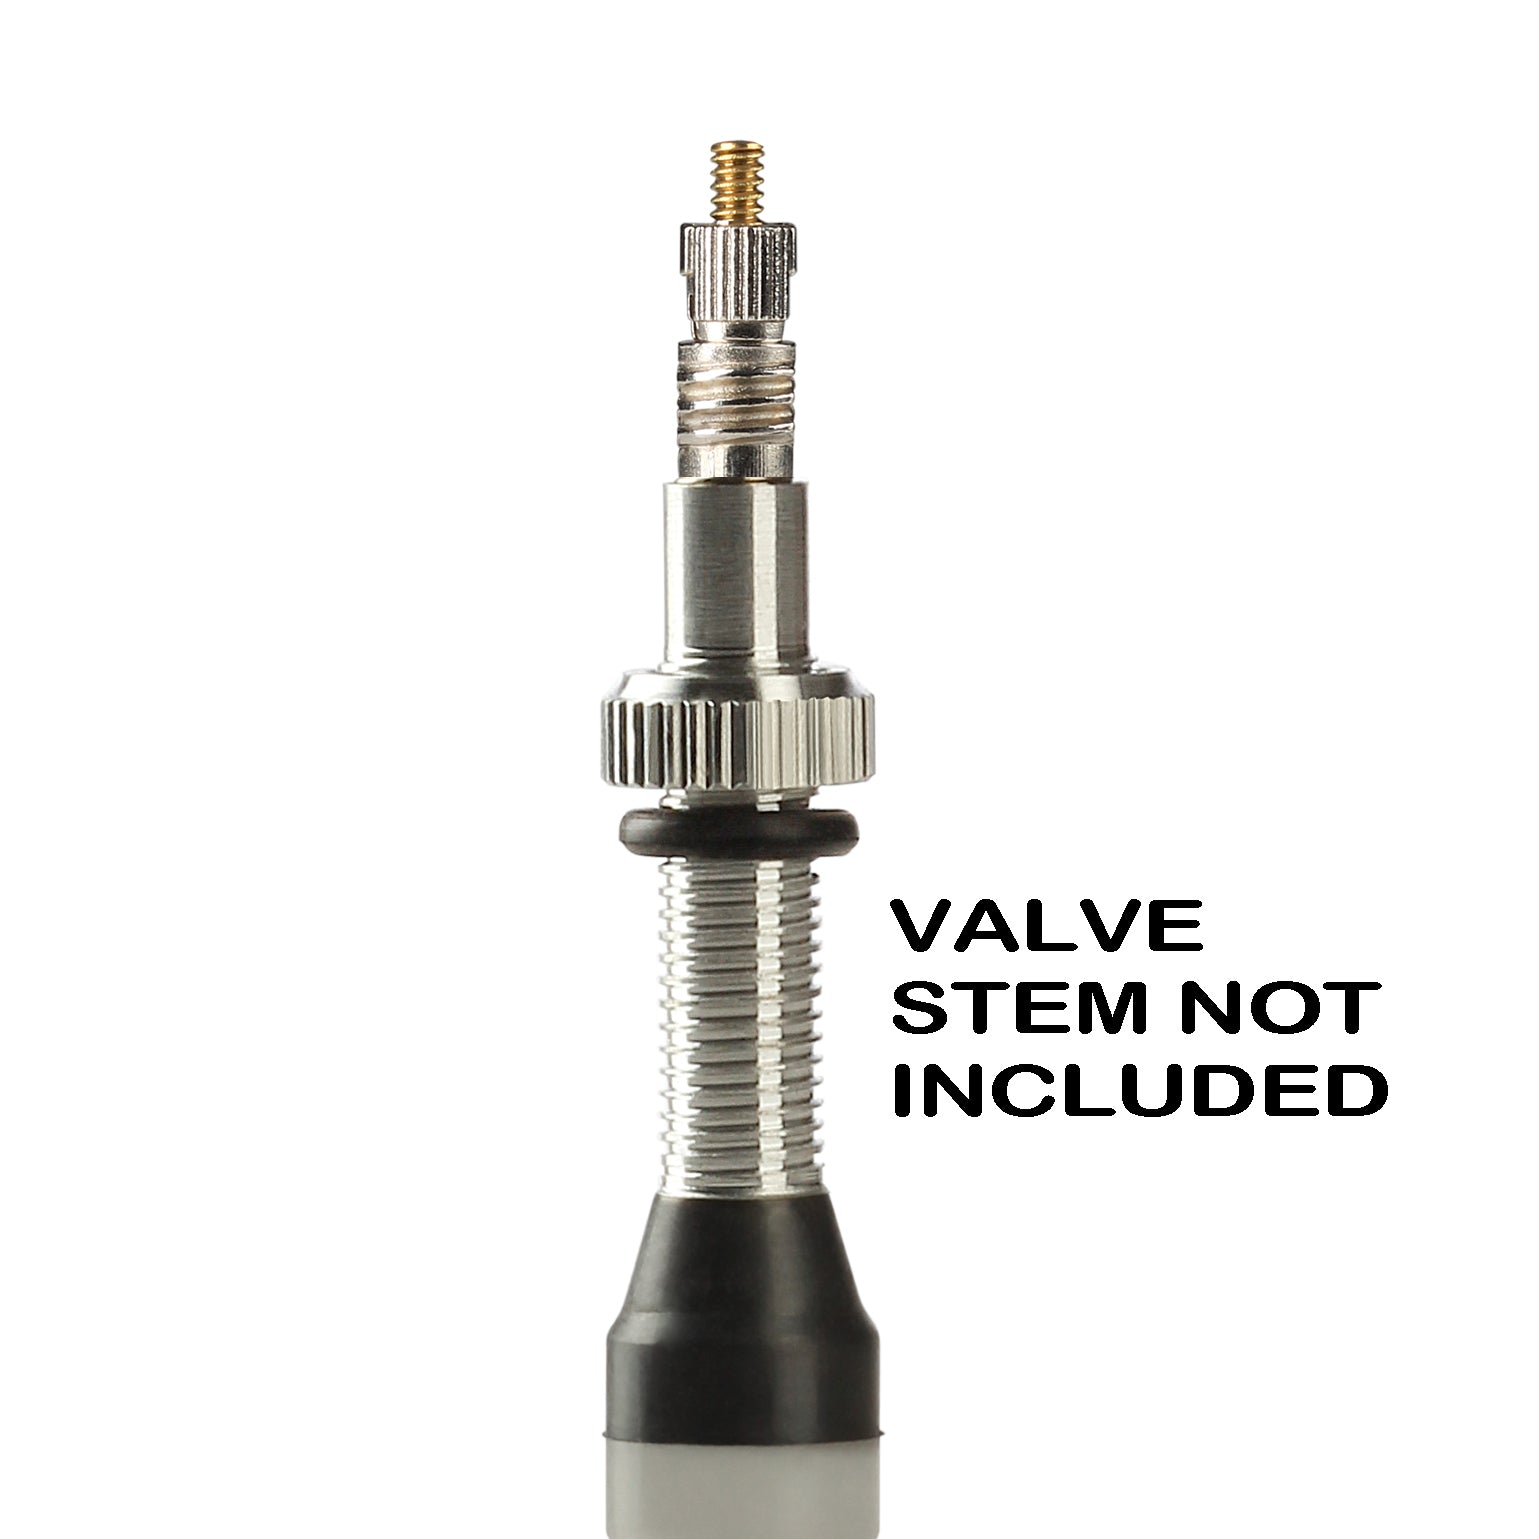 replacing a presta valve